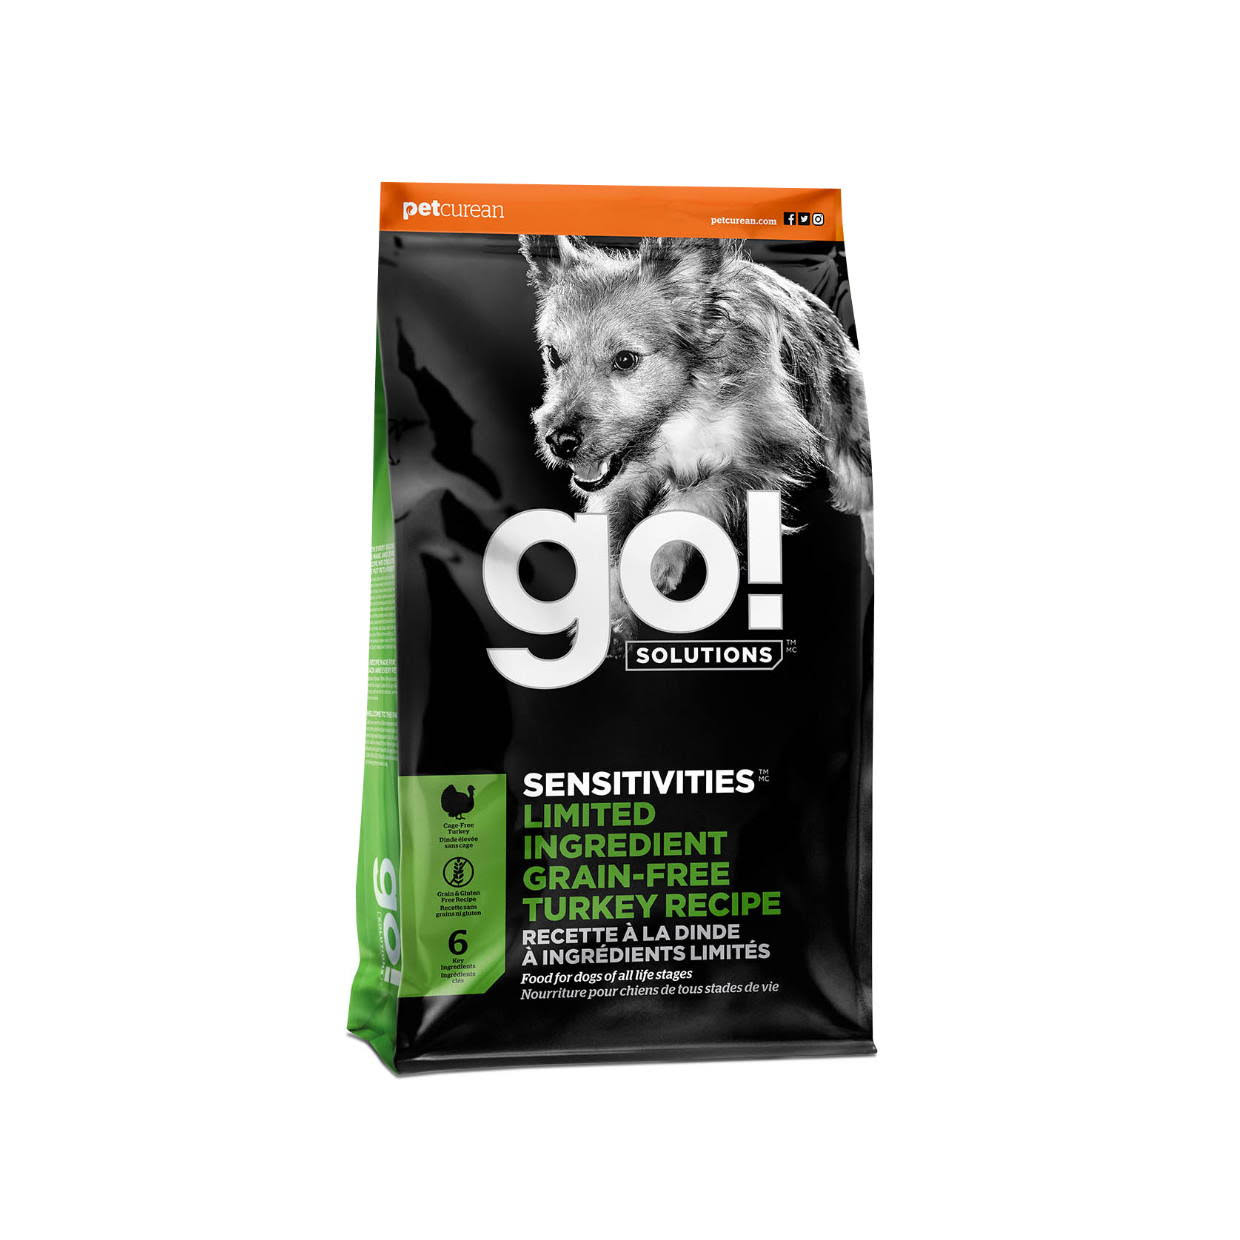 Go! Sensitivities Limited Ingredient Turkey Grain-Free Dry Dog Food, 12-lb BAG.